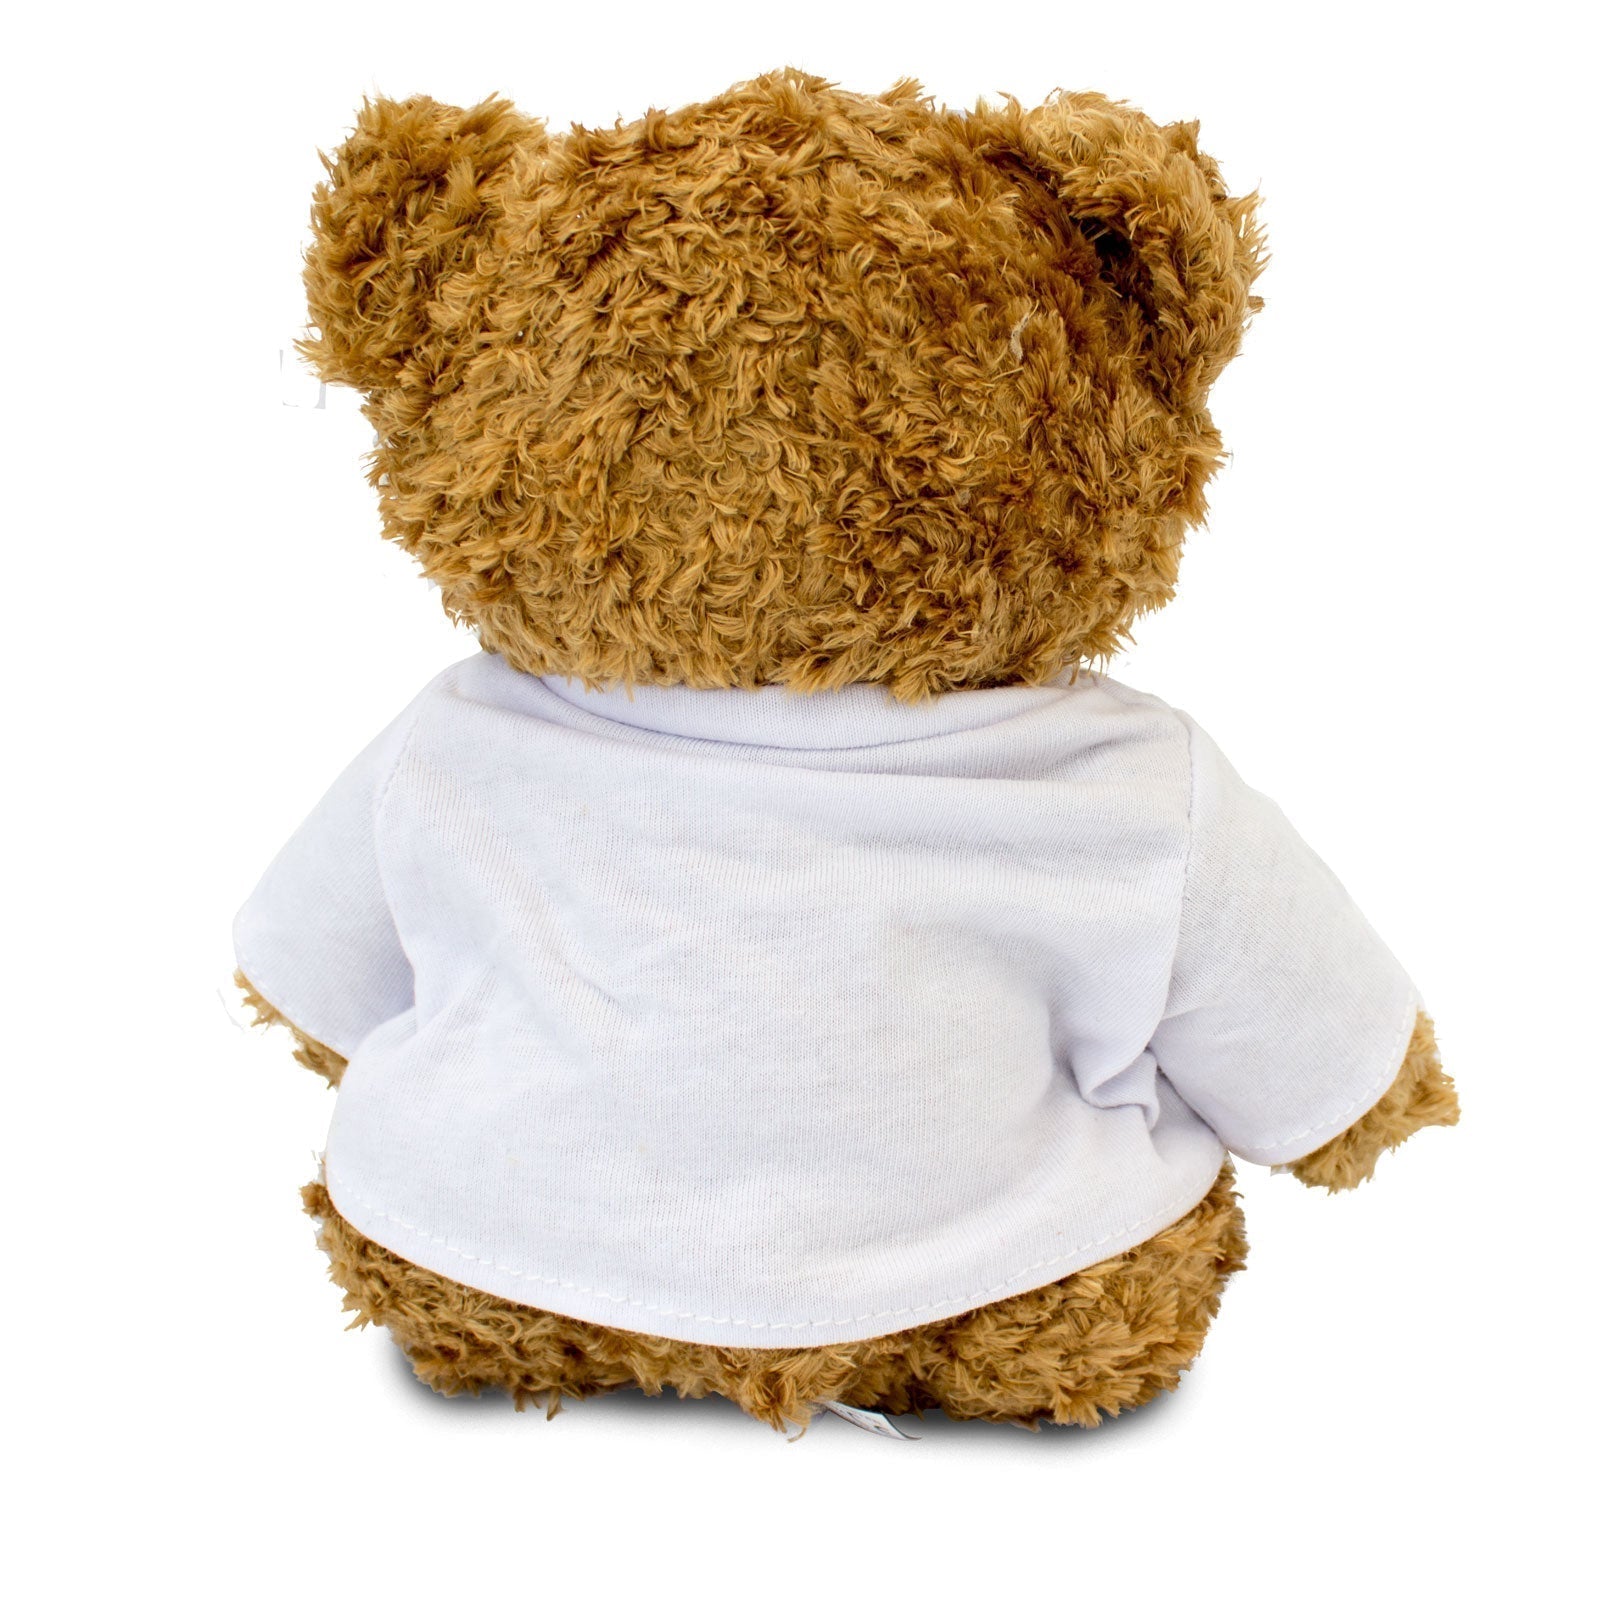 I Love Weights - Teddy Bear